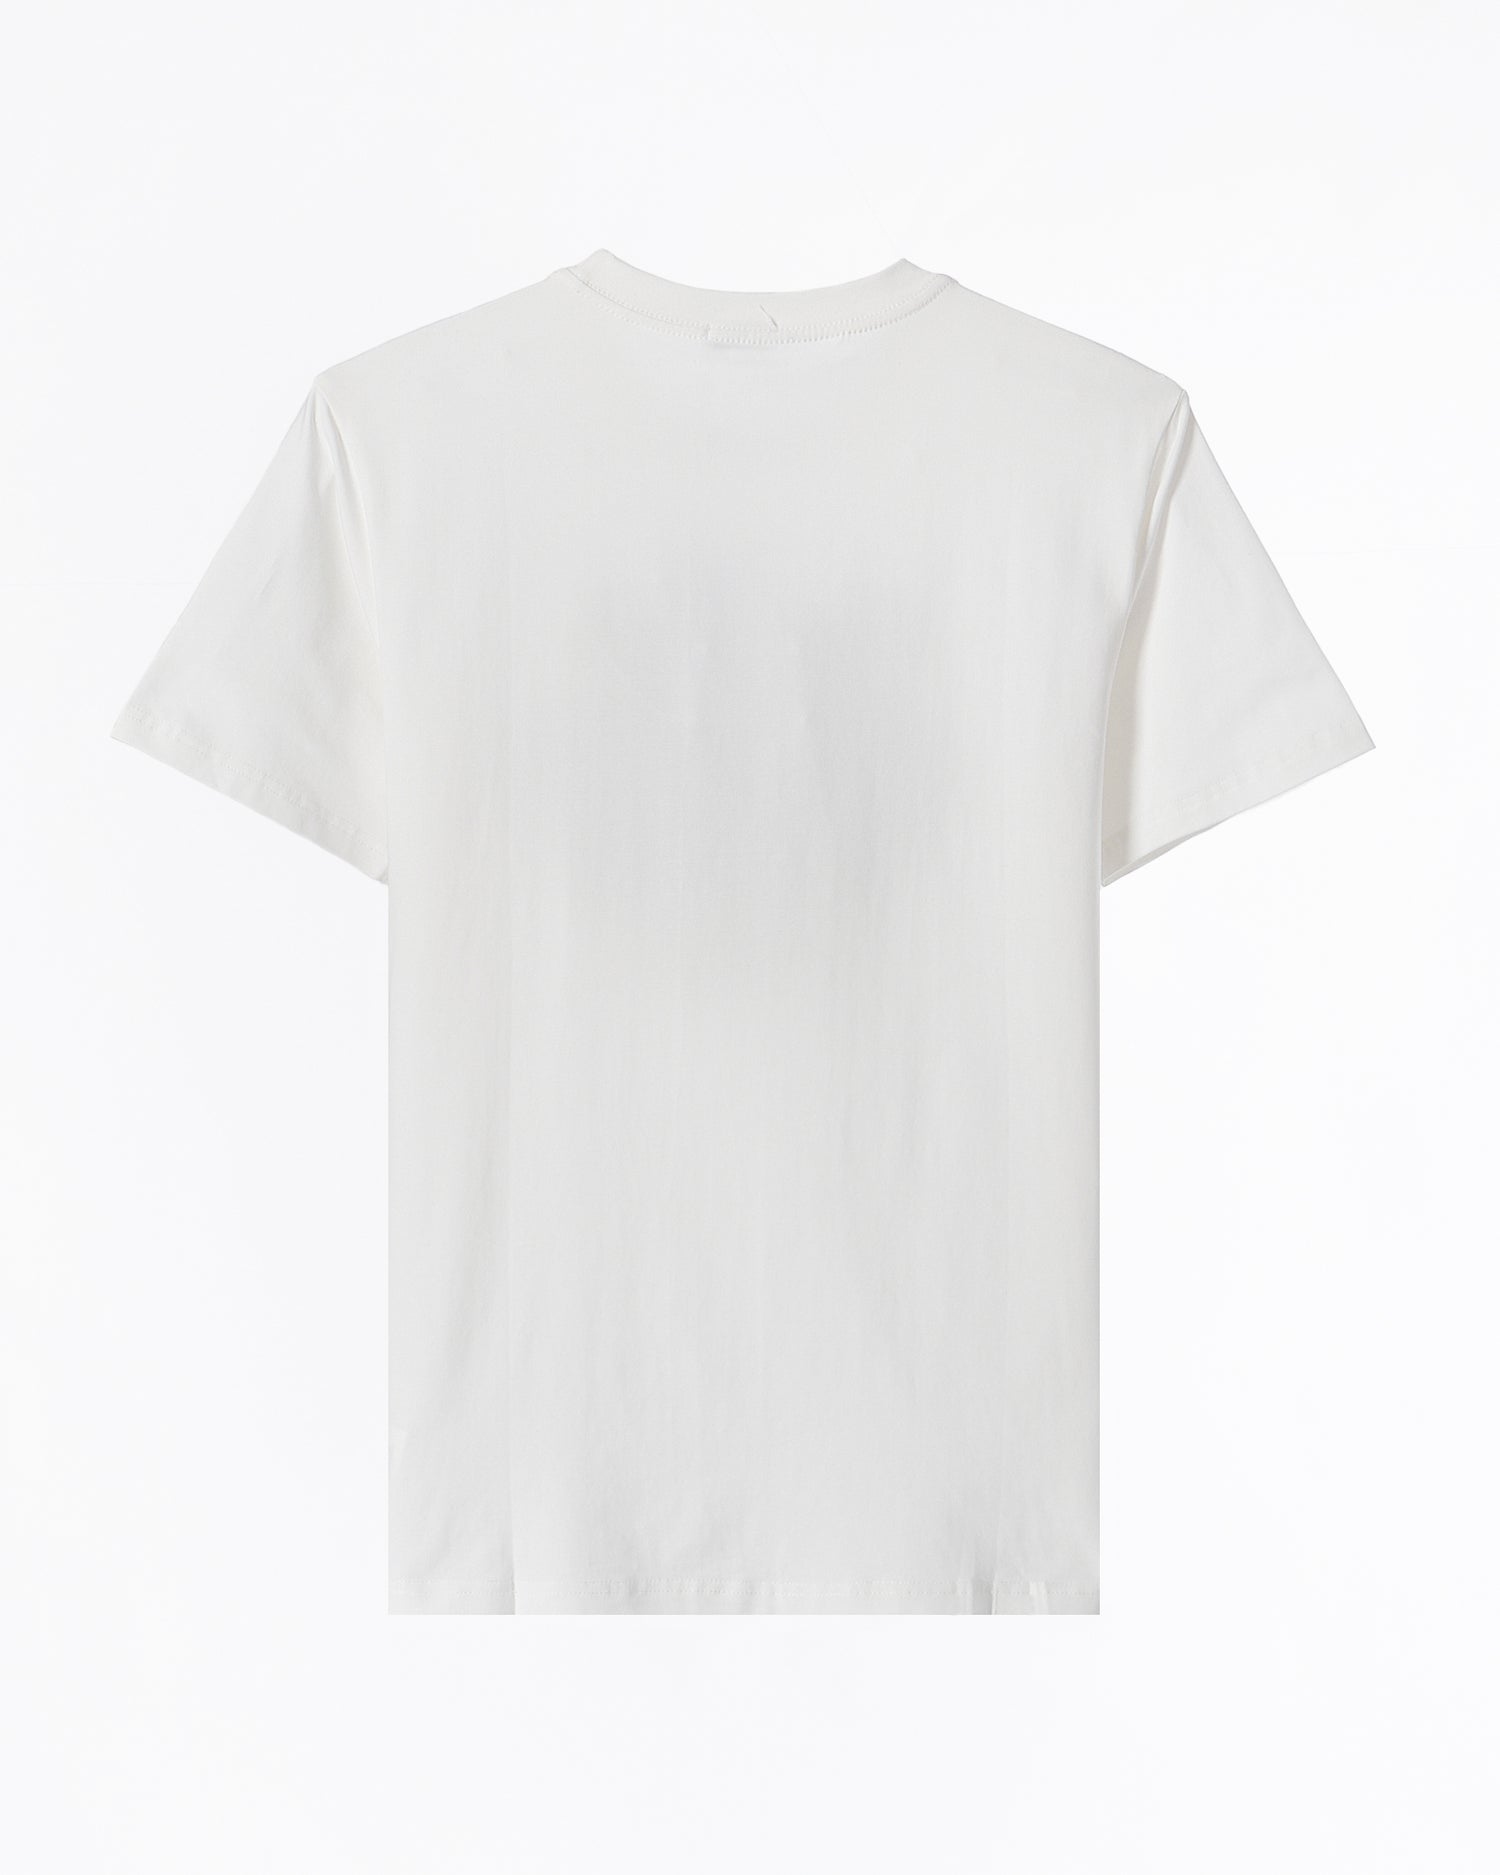 KEN Tiger Head Green Embroidered Unisex White T-Shirt 23.90